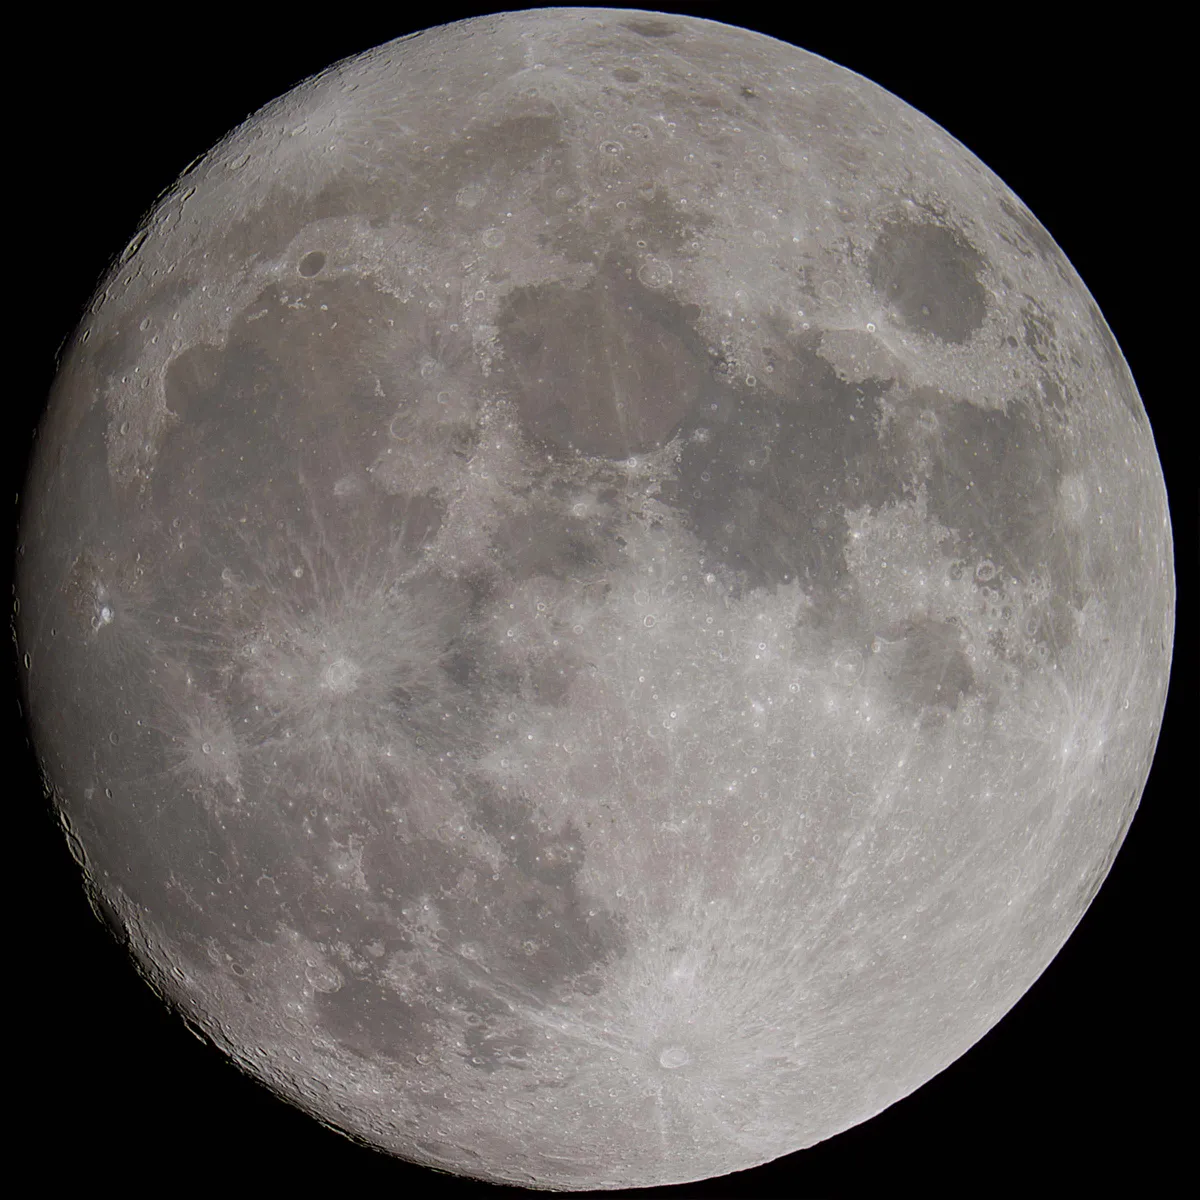 Moon 22-01-2016 by Paul Cotton, Lincolnshire, UK. Equipment: Celestron c9.25 SCT, 6.3 focal reducer, Skywatcher NEQ6 pro mount, Canon 1100d.